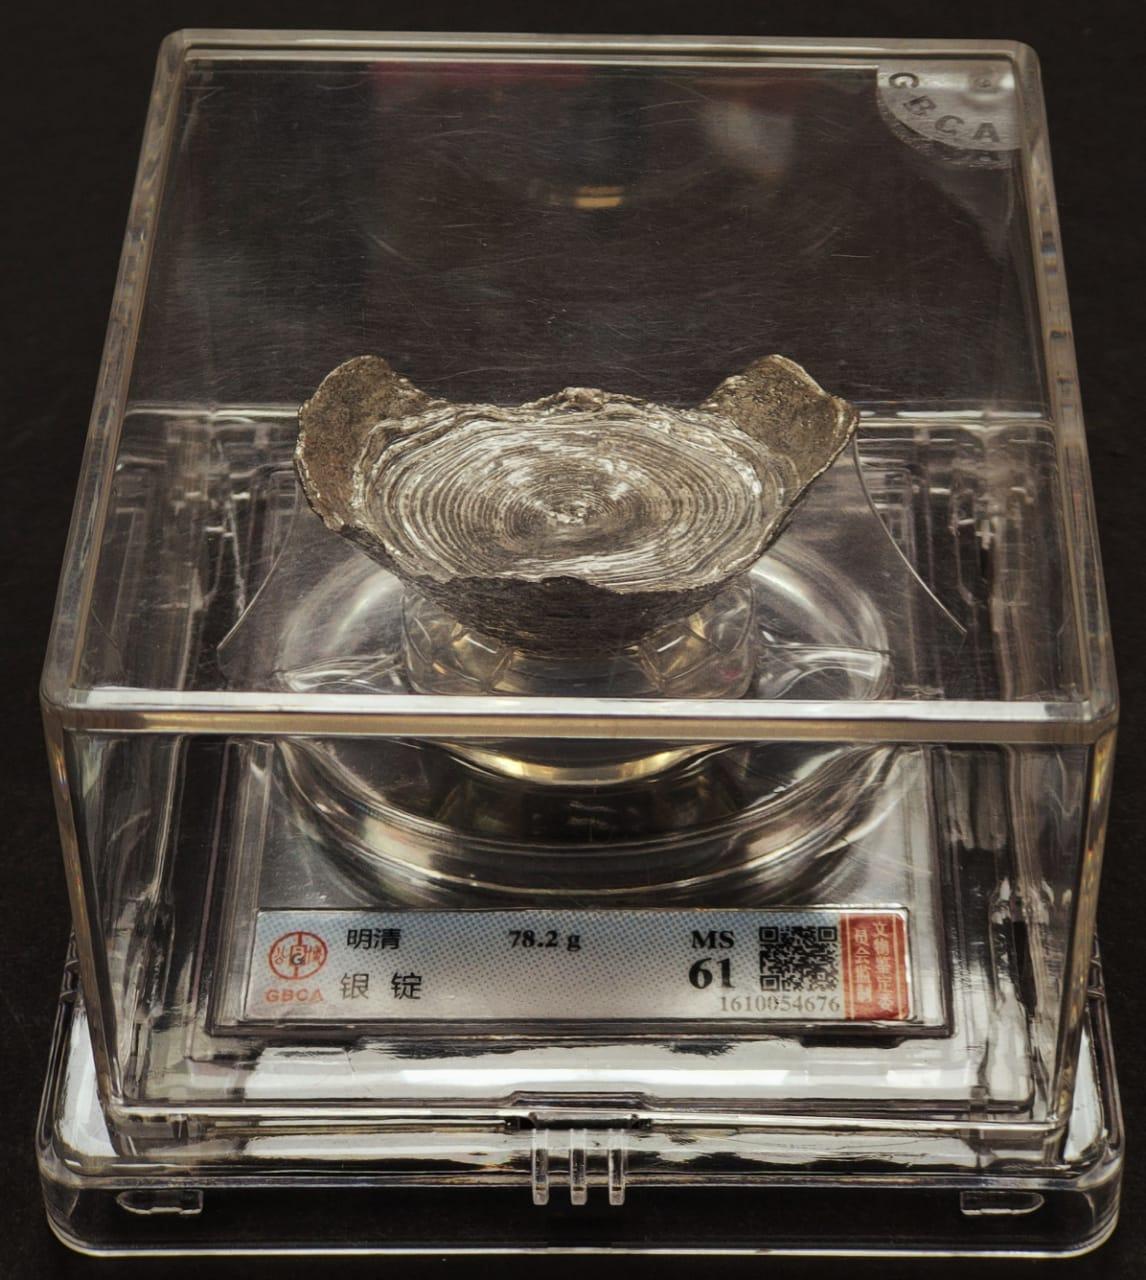 China Silver Ingot Ming Qing Dynasty 78.2g GBCA MS61 | Monetarium 